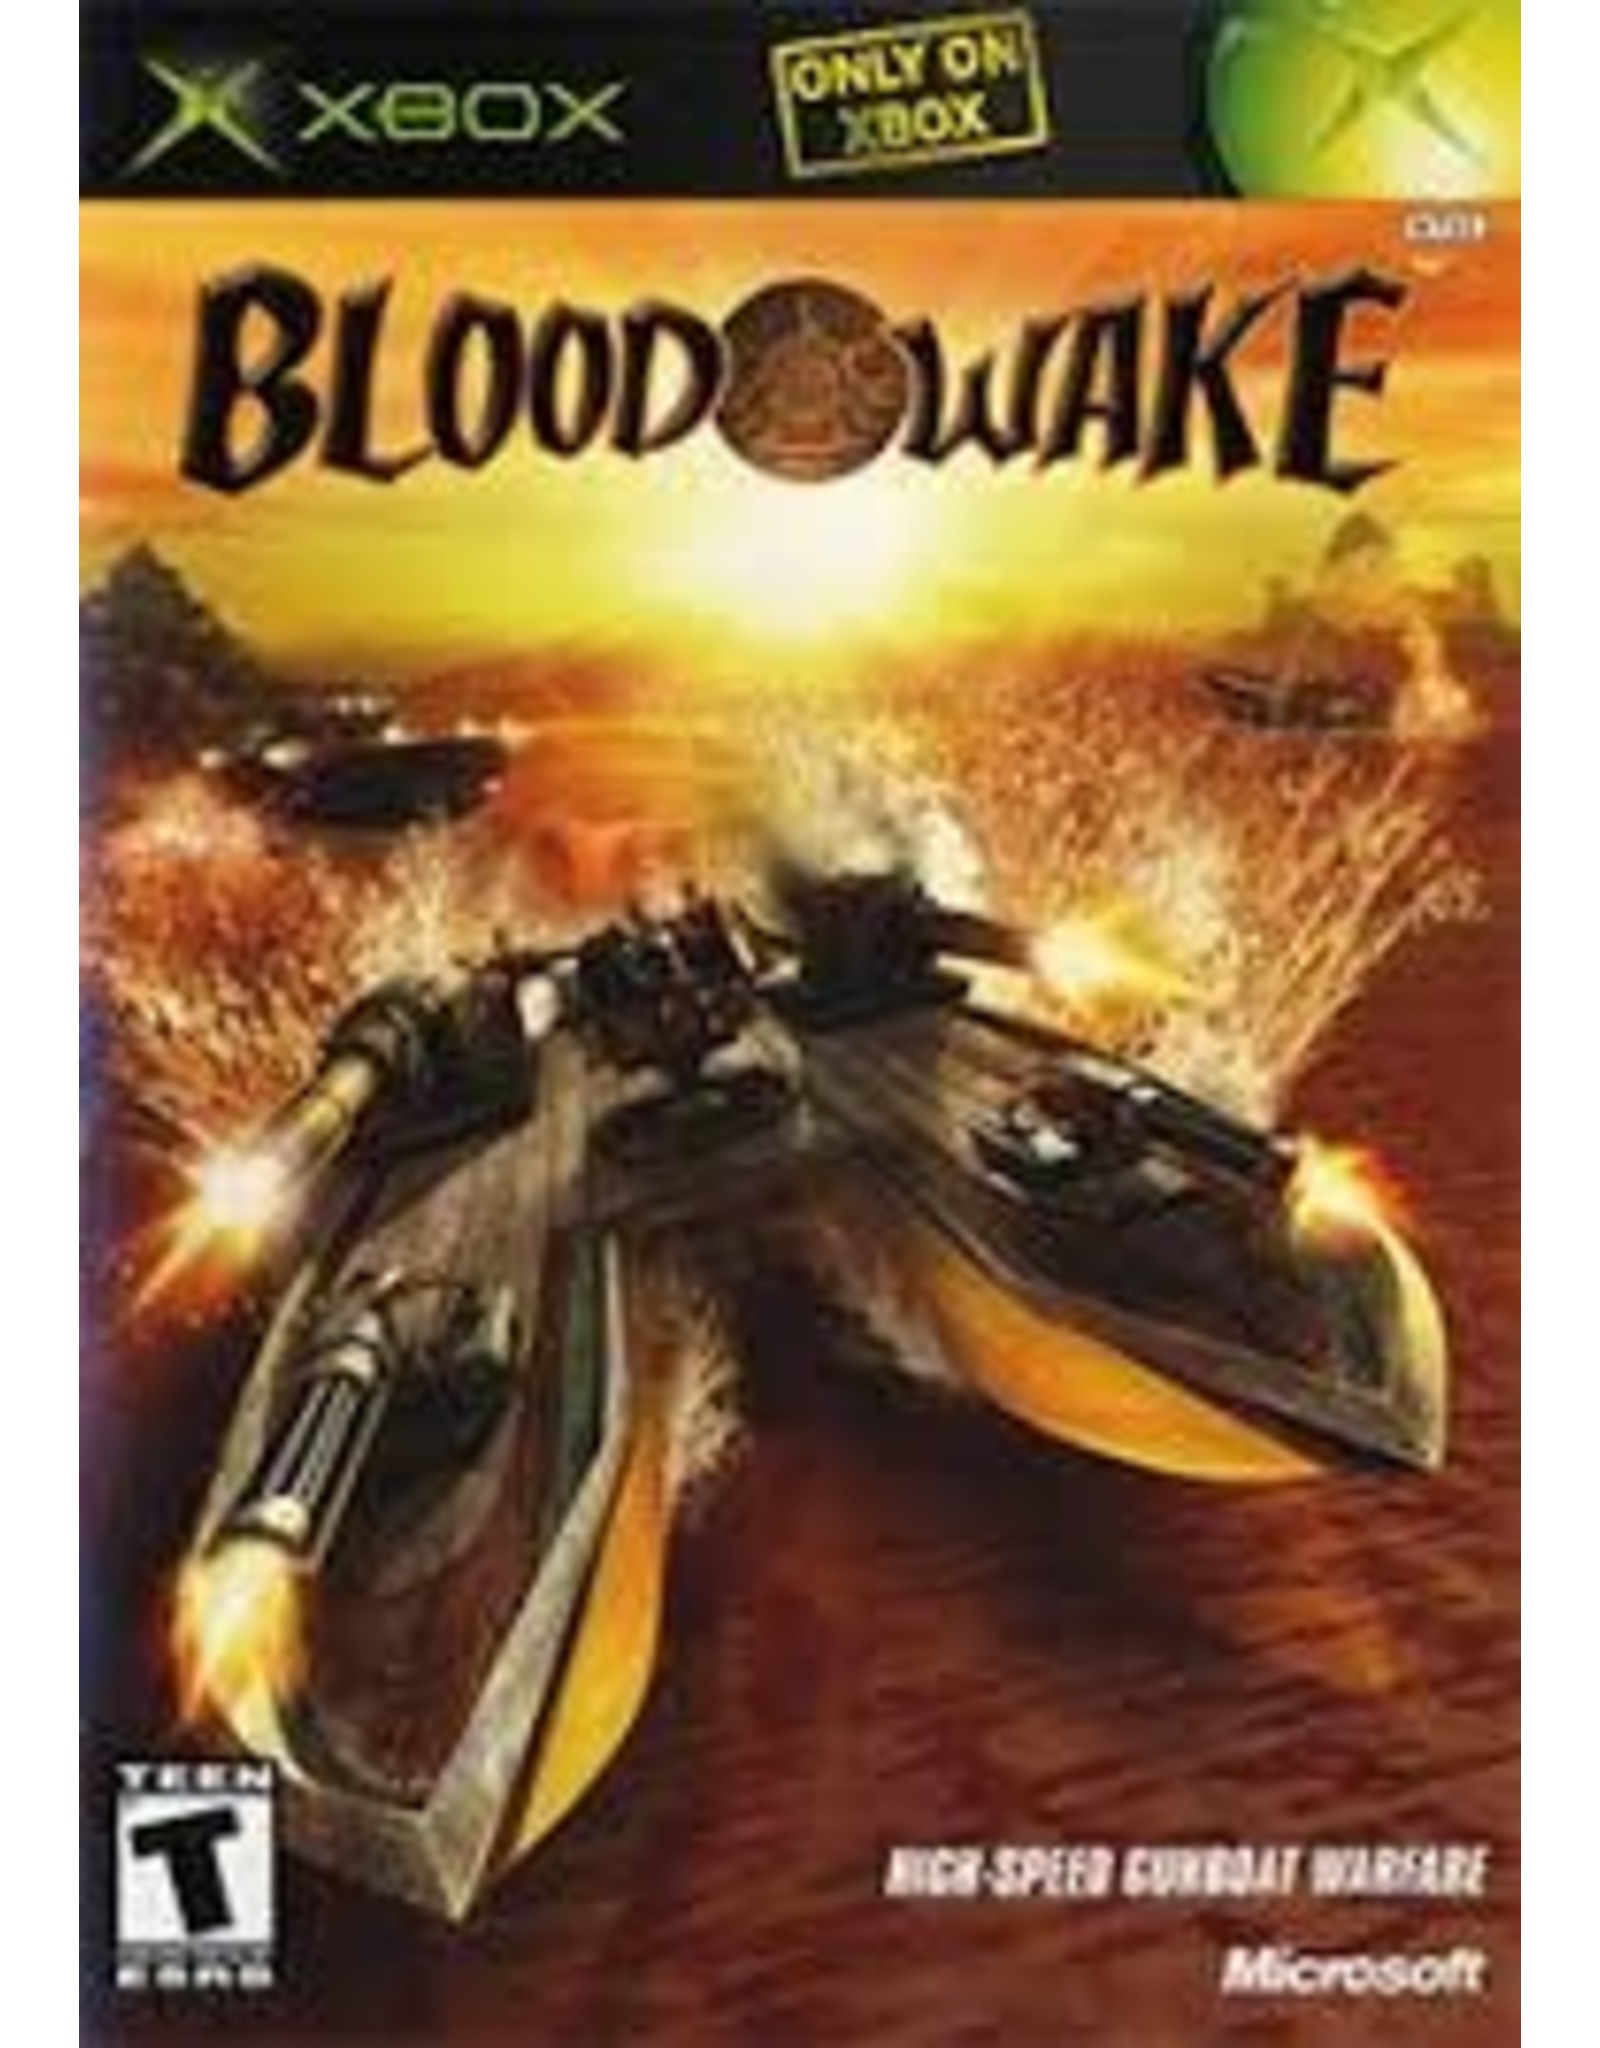 Xbox Blood Wake (No Manual)